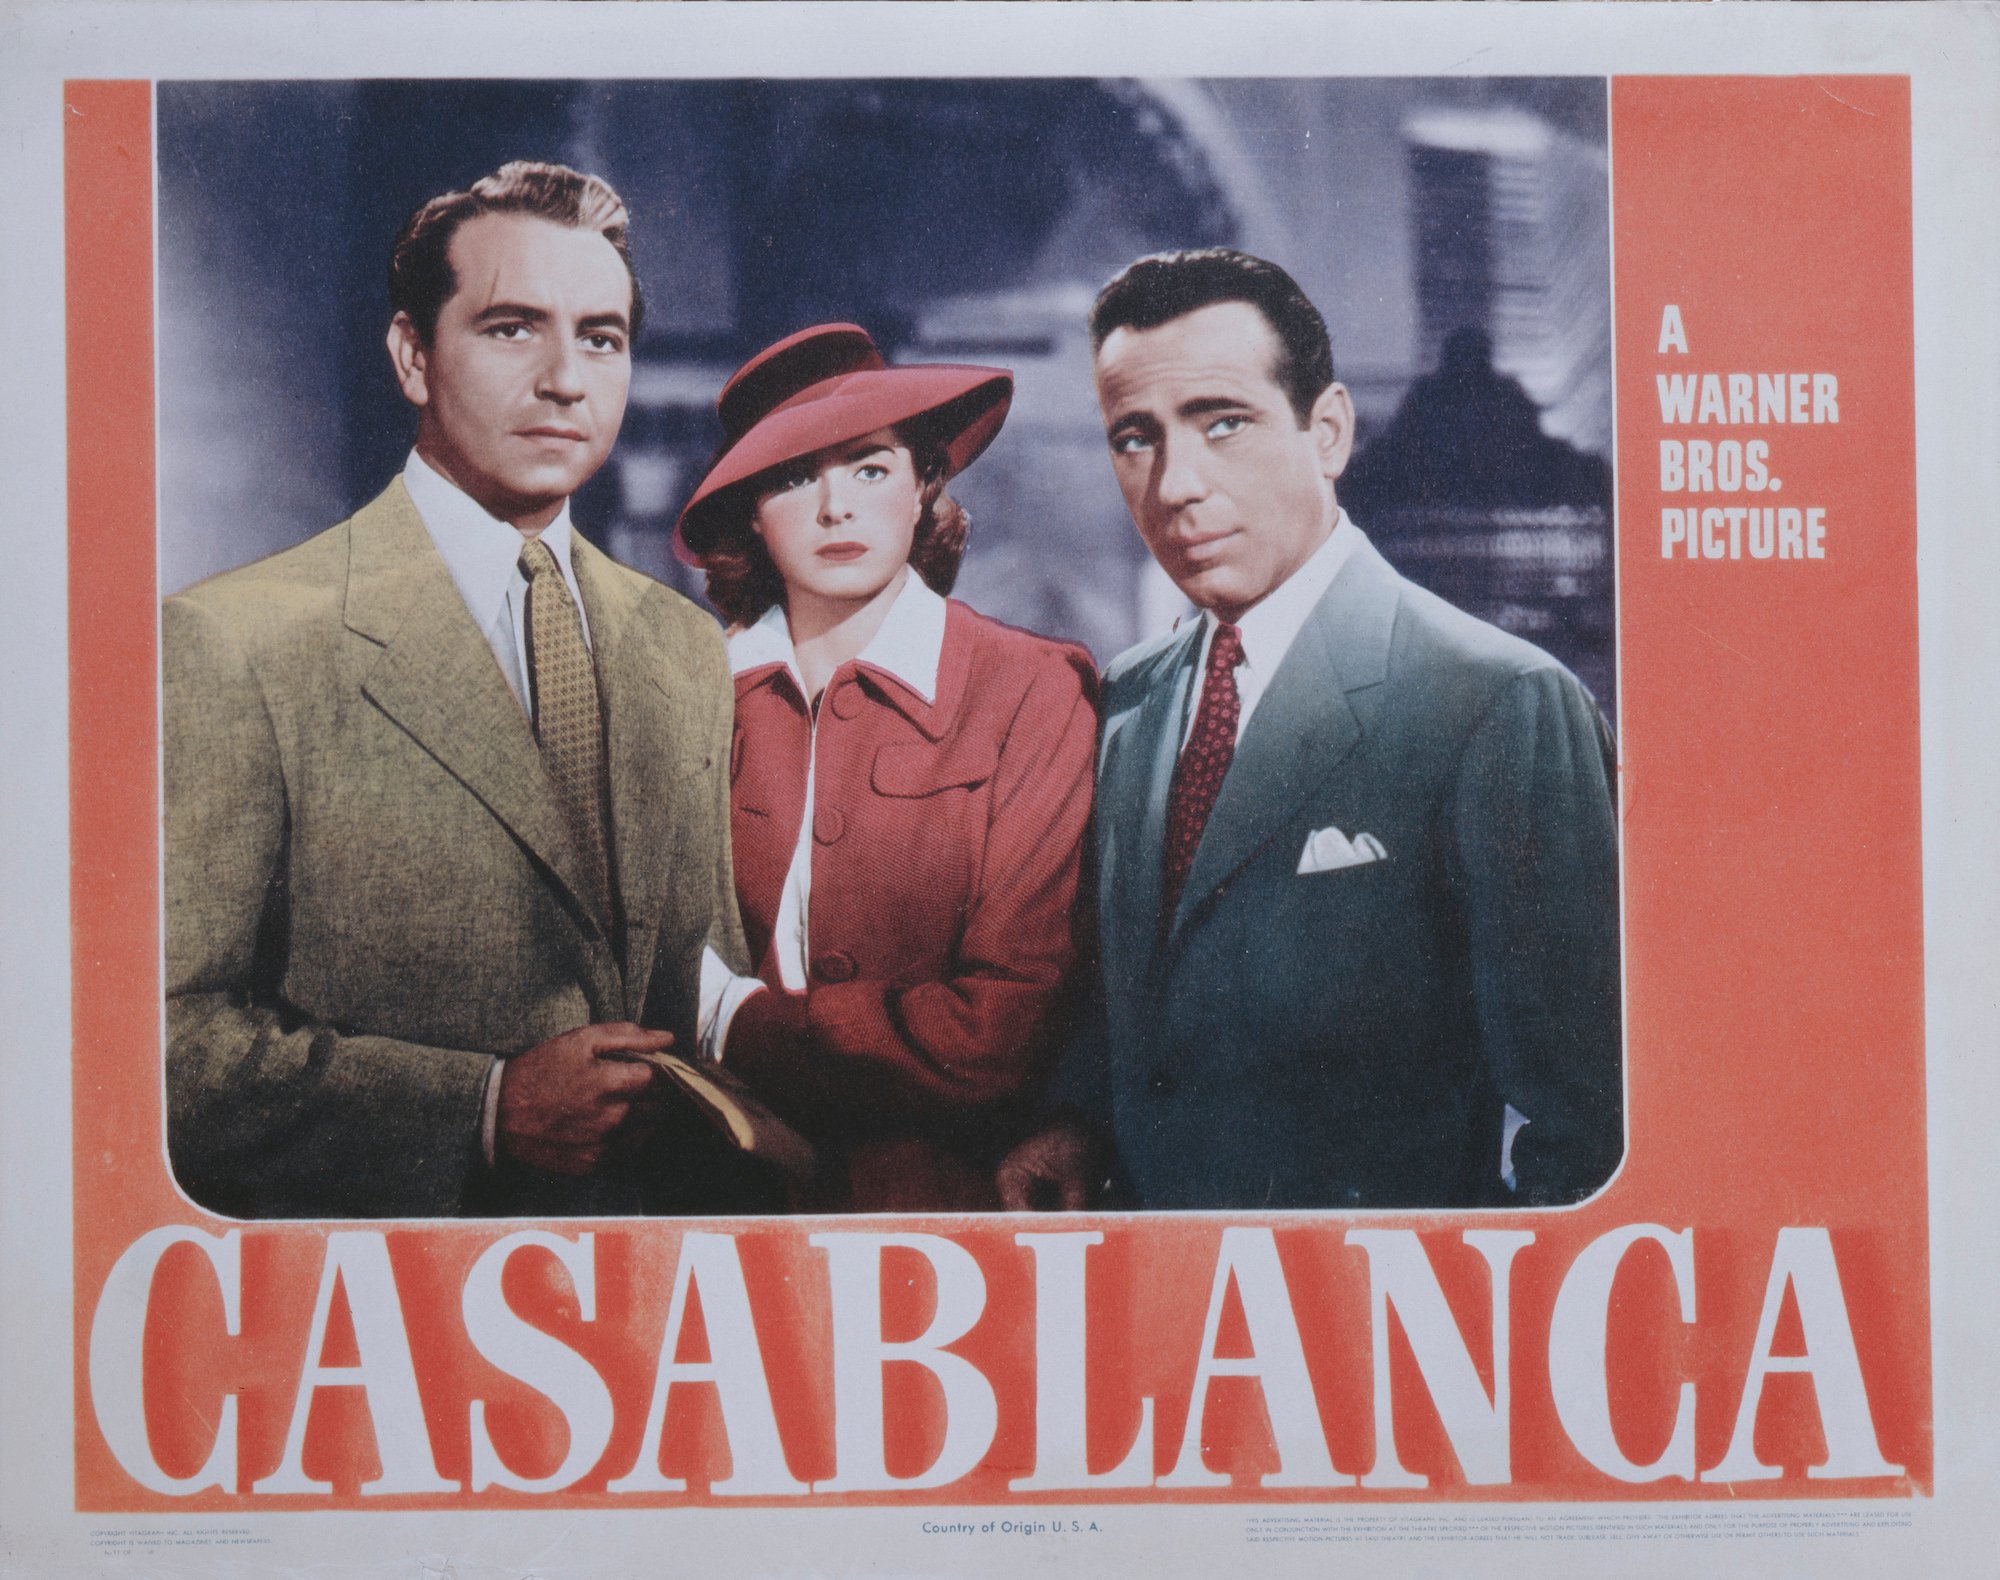 Casablanca poster with photos of actors (L-R) Paul Henreid, Ingrid Bergman, and Humphrey Bogart